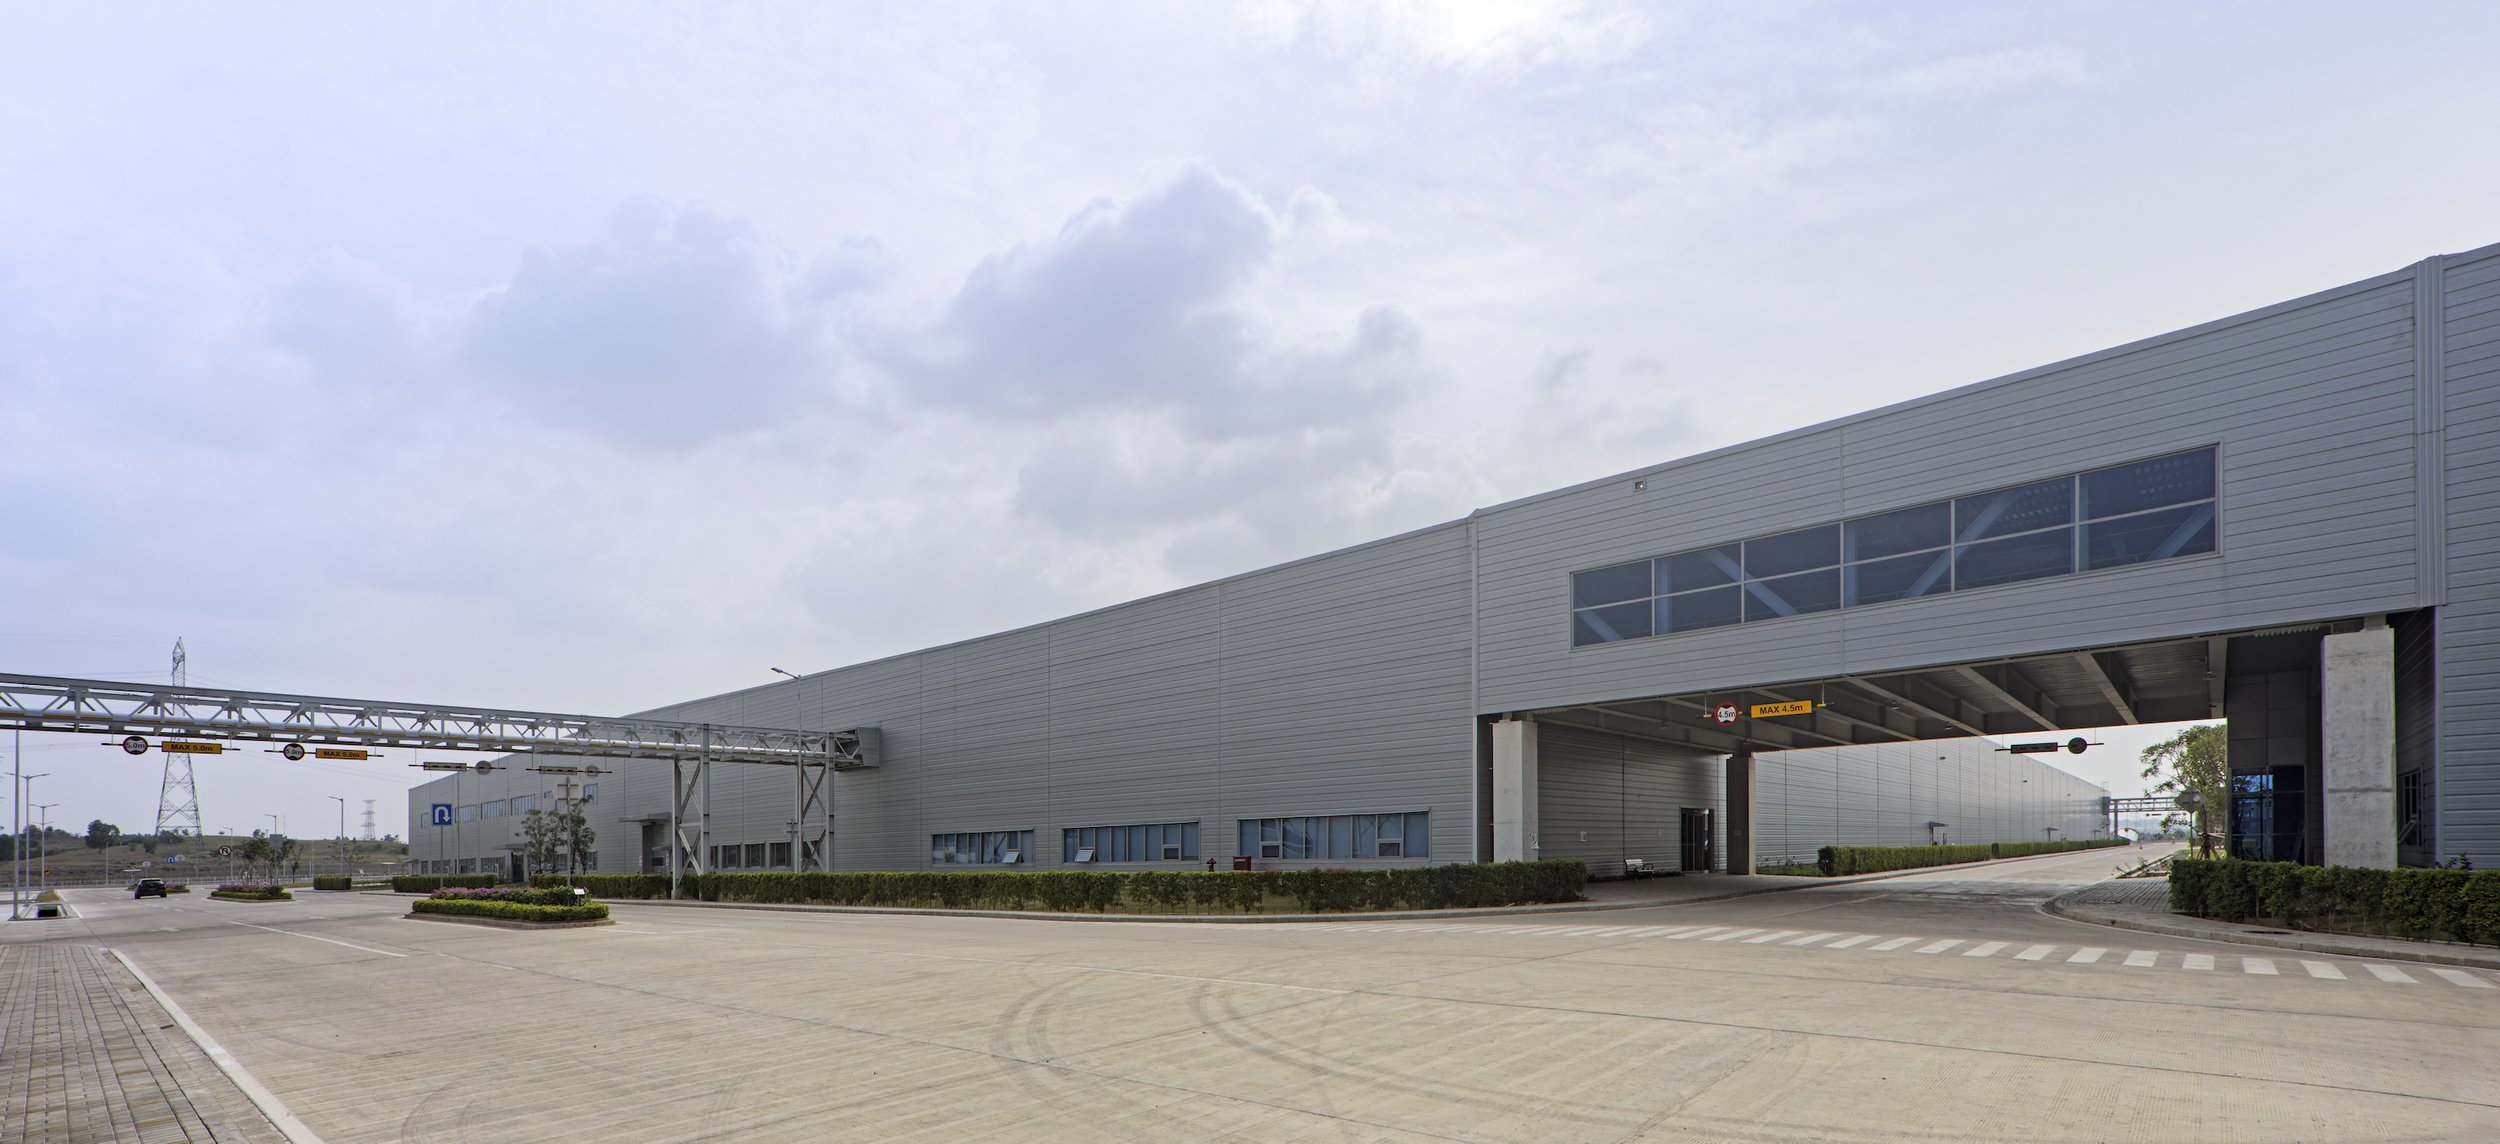 162-Hyundai Factory (TAKENAKA) -29.08__05.09.2021-.jpg